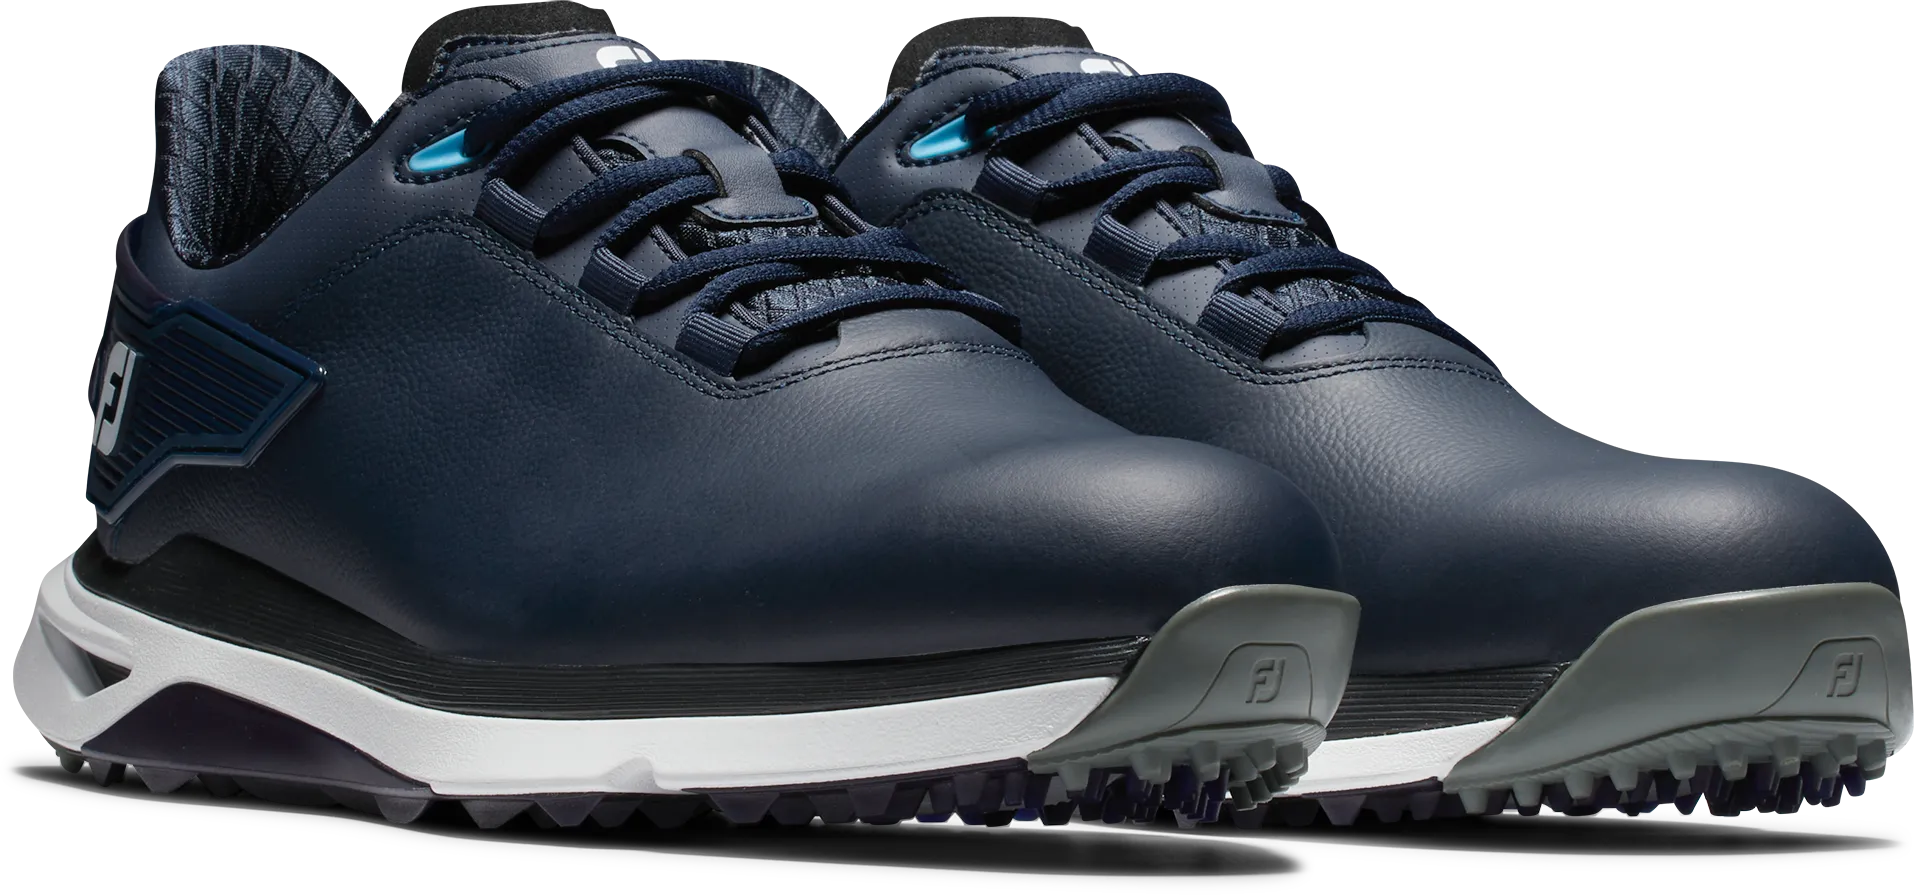 FootJoy PRO SLX Golfschuh, dunkelblau/weiß